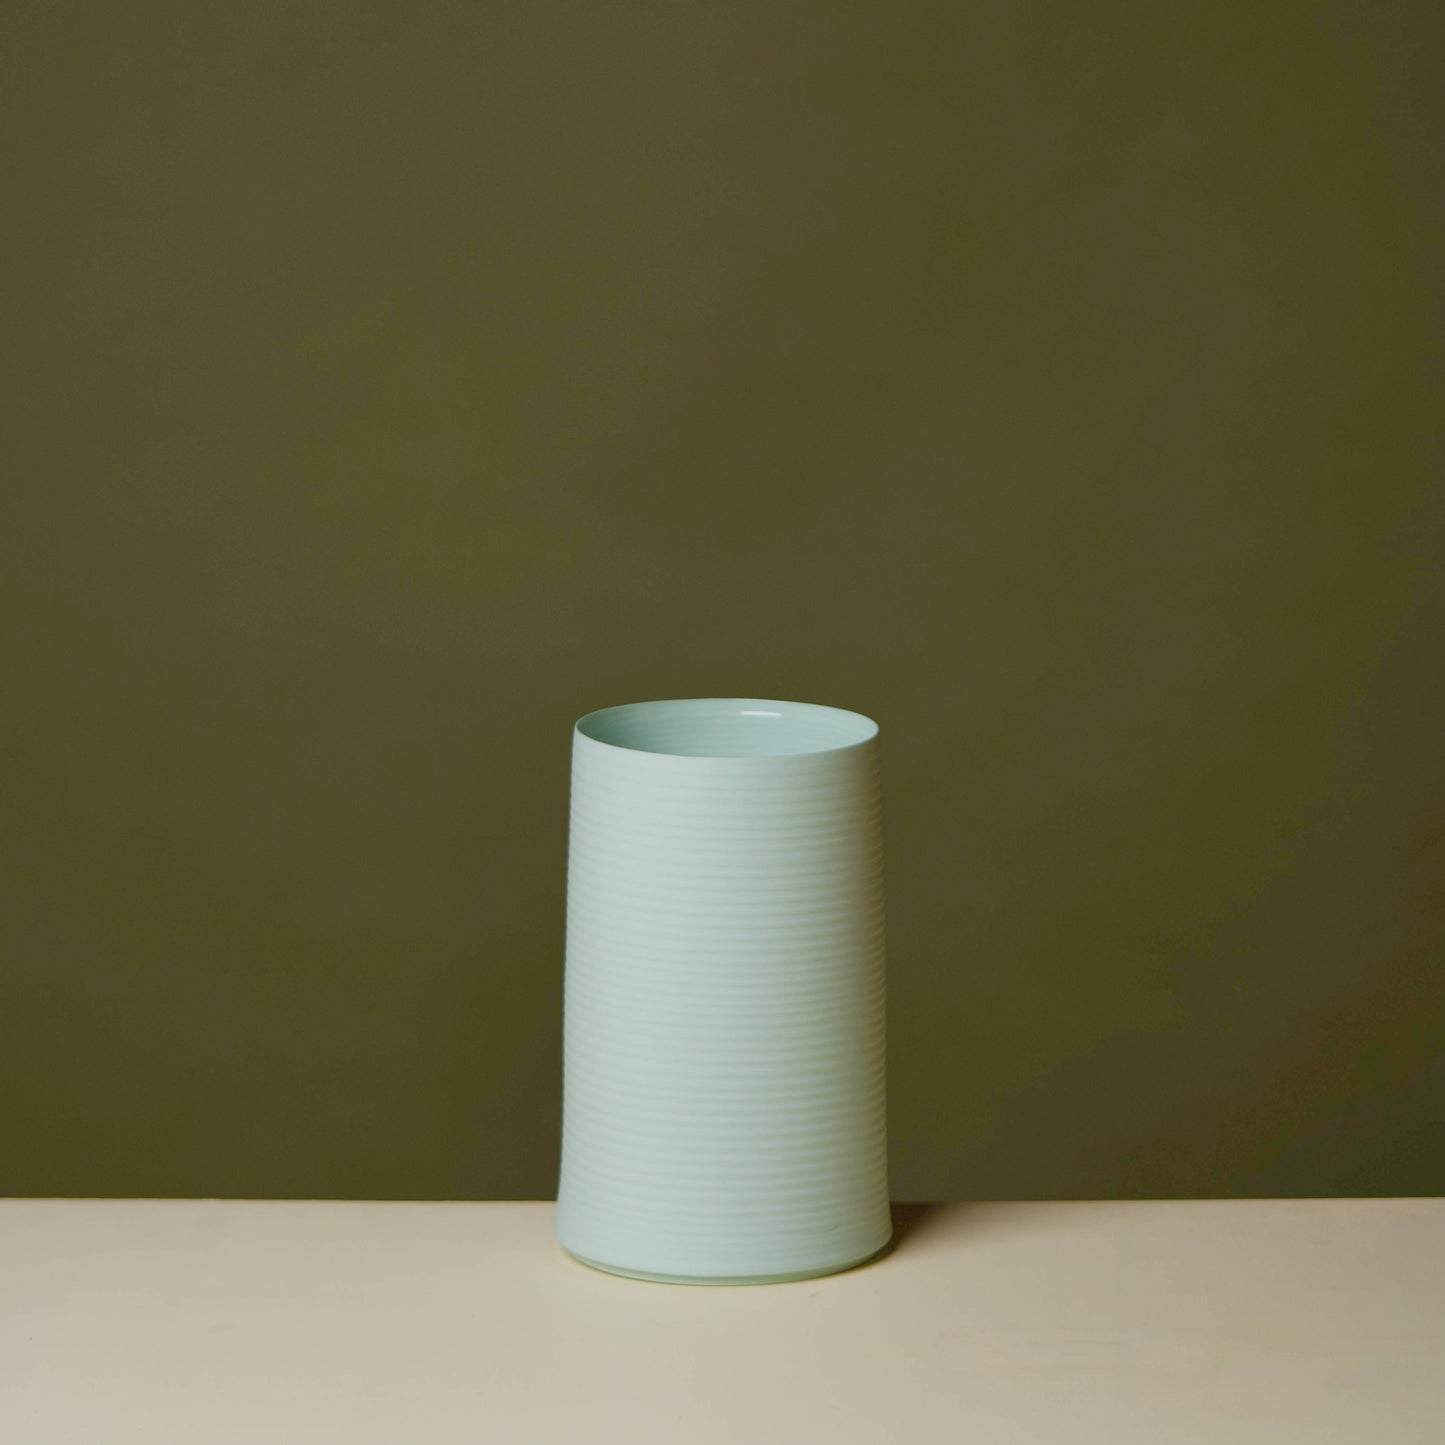 Cold Mountain Matte Porcelain Vase - Small: Butter